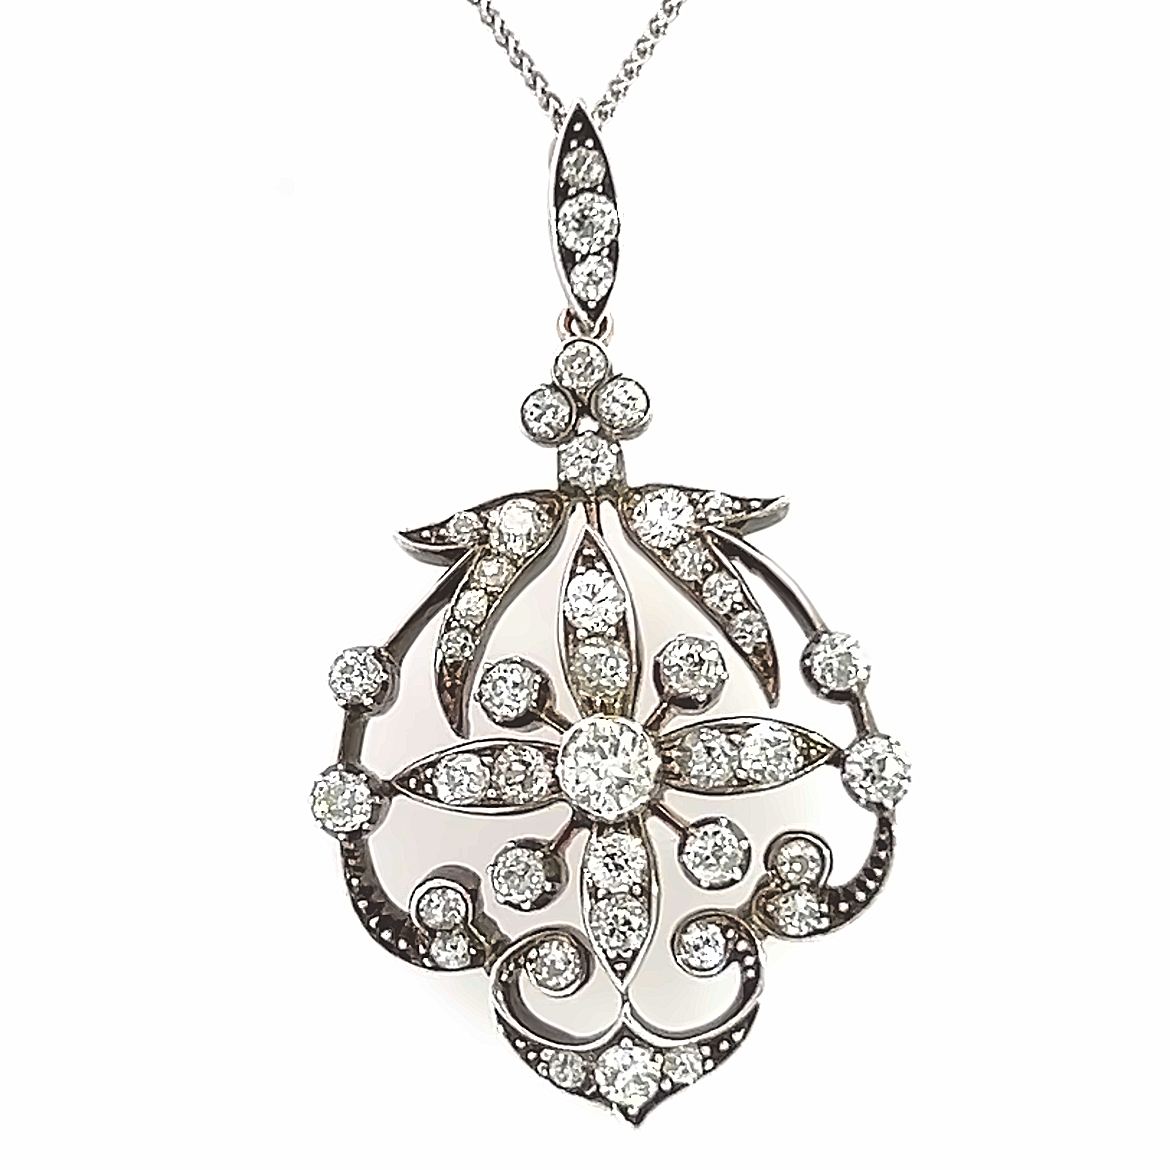 Victorian Diamond Pendant